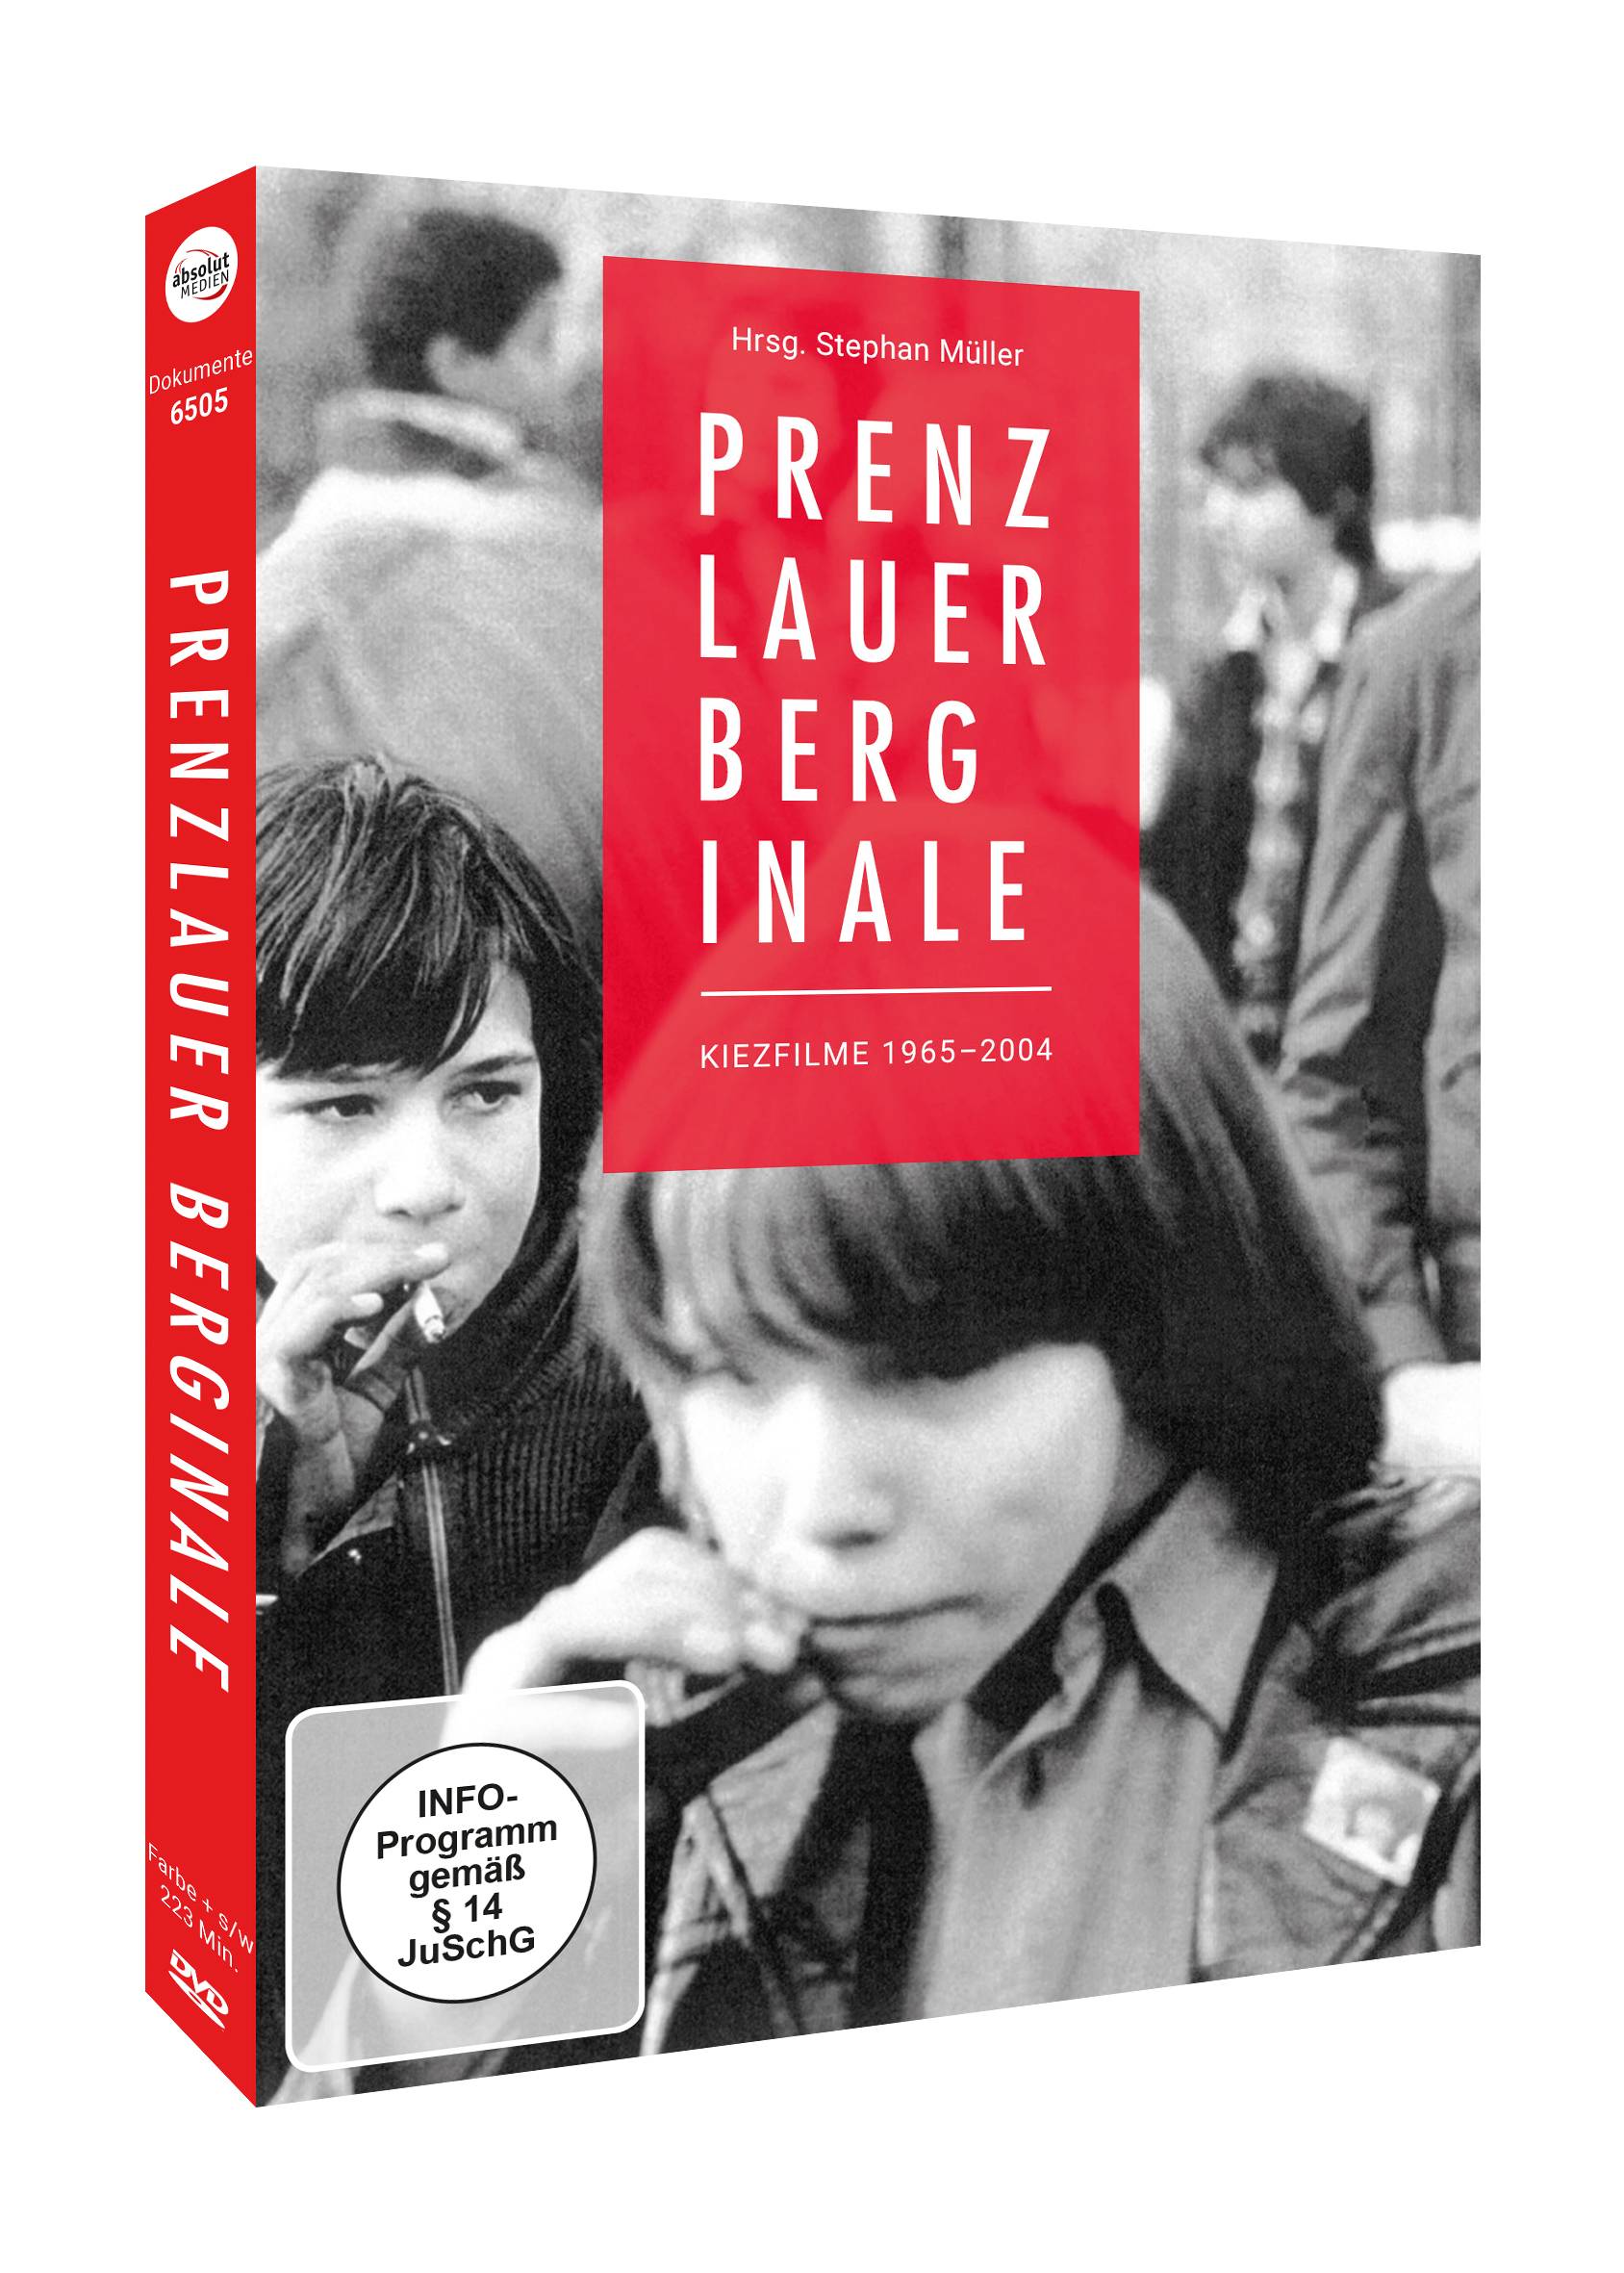 Prenzlauer Berginale - Original Kiezfilme 1965-2004 (Neuauflage)